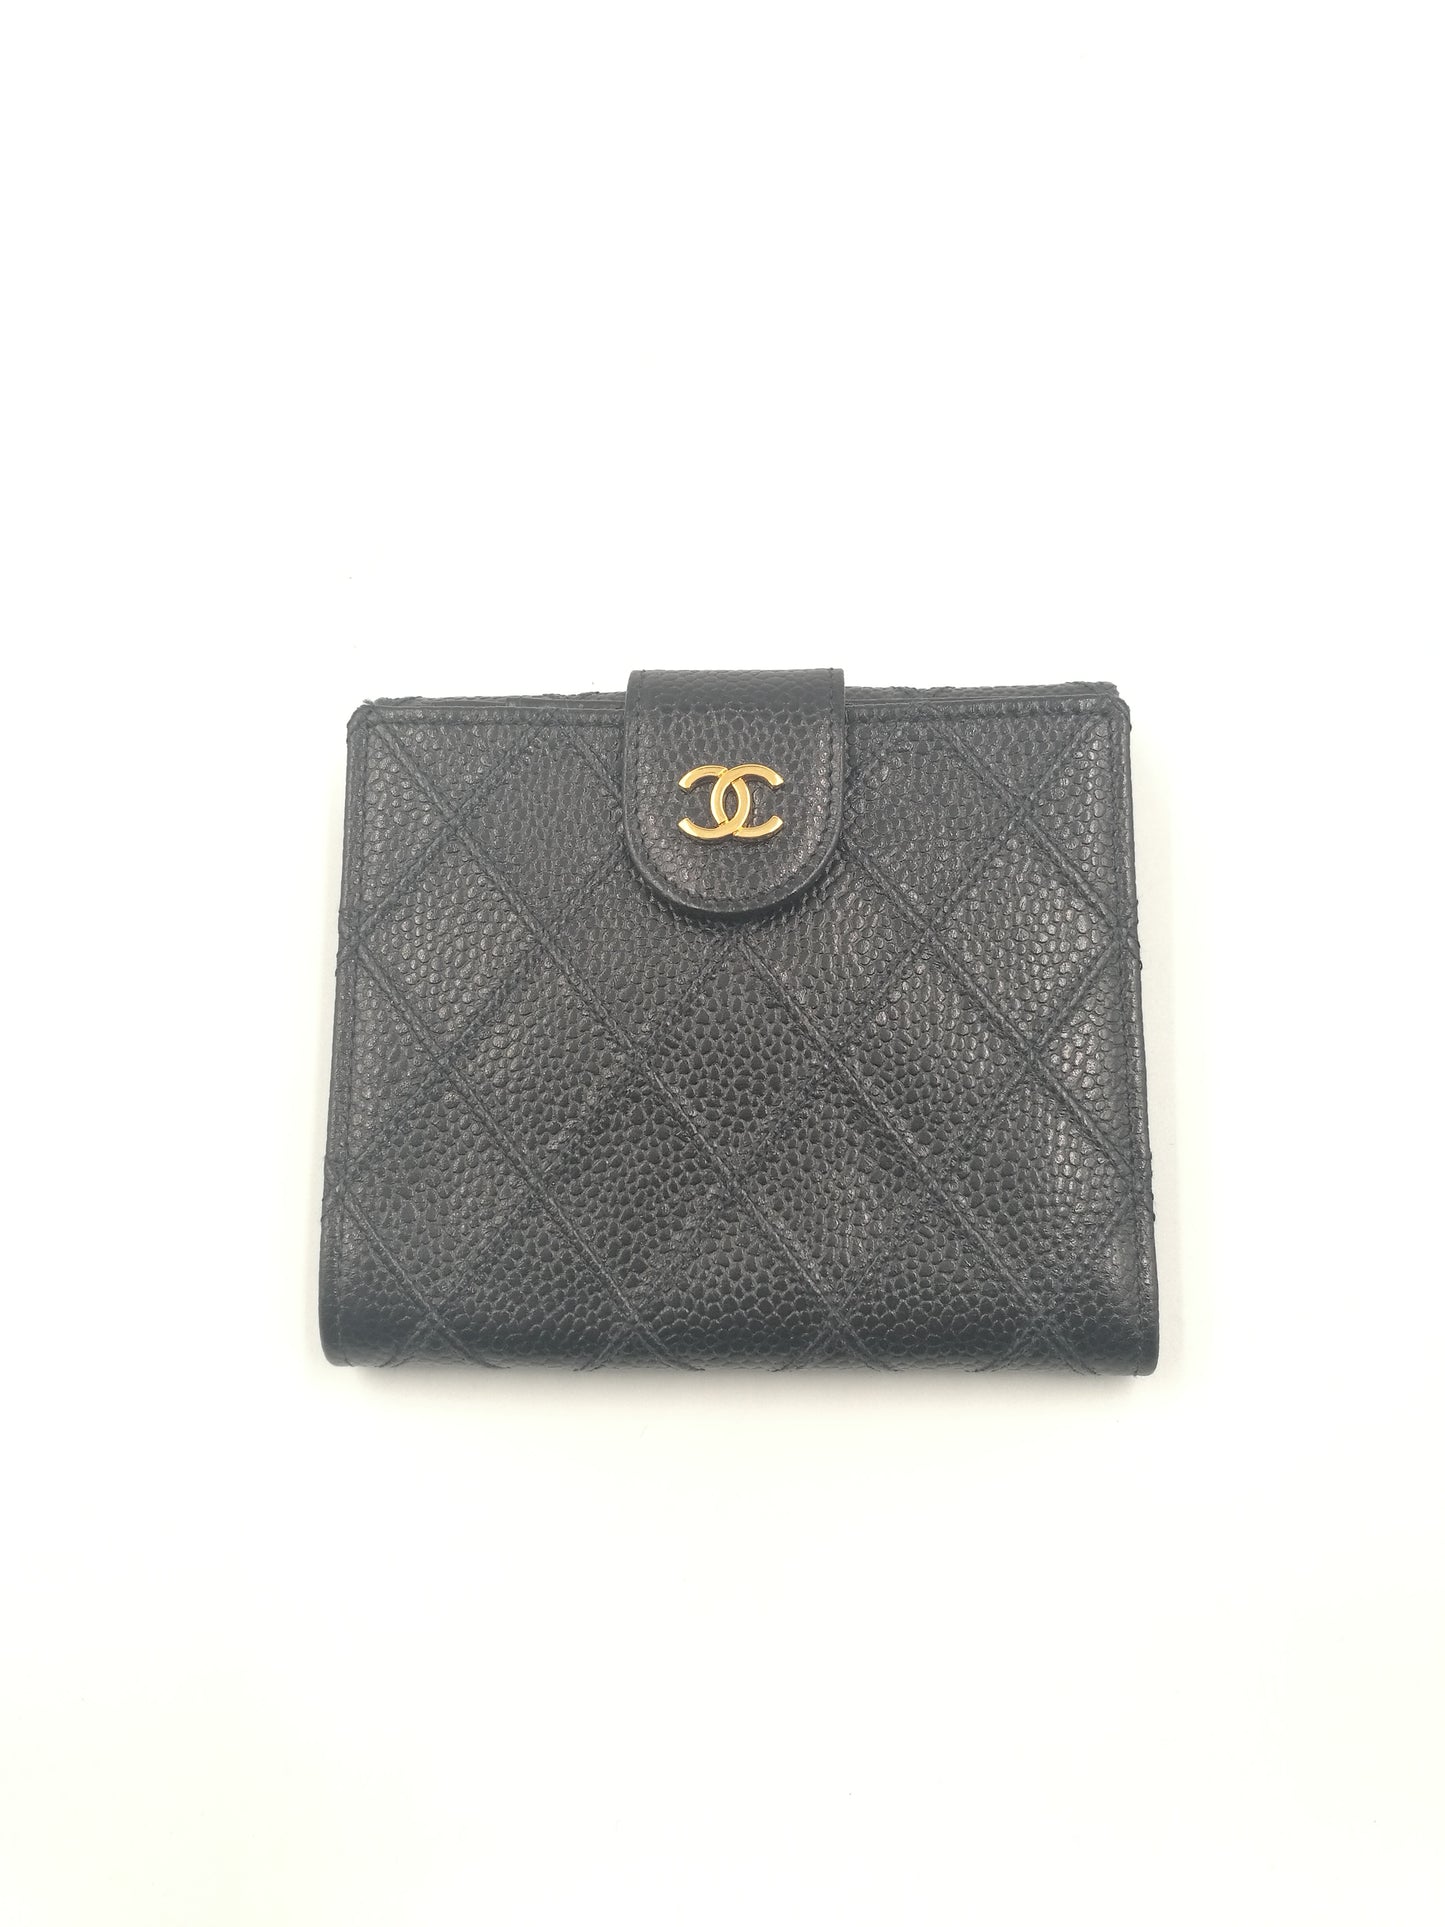 Chanel vintage wallet